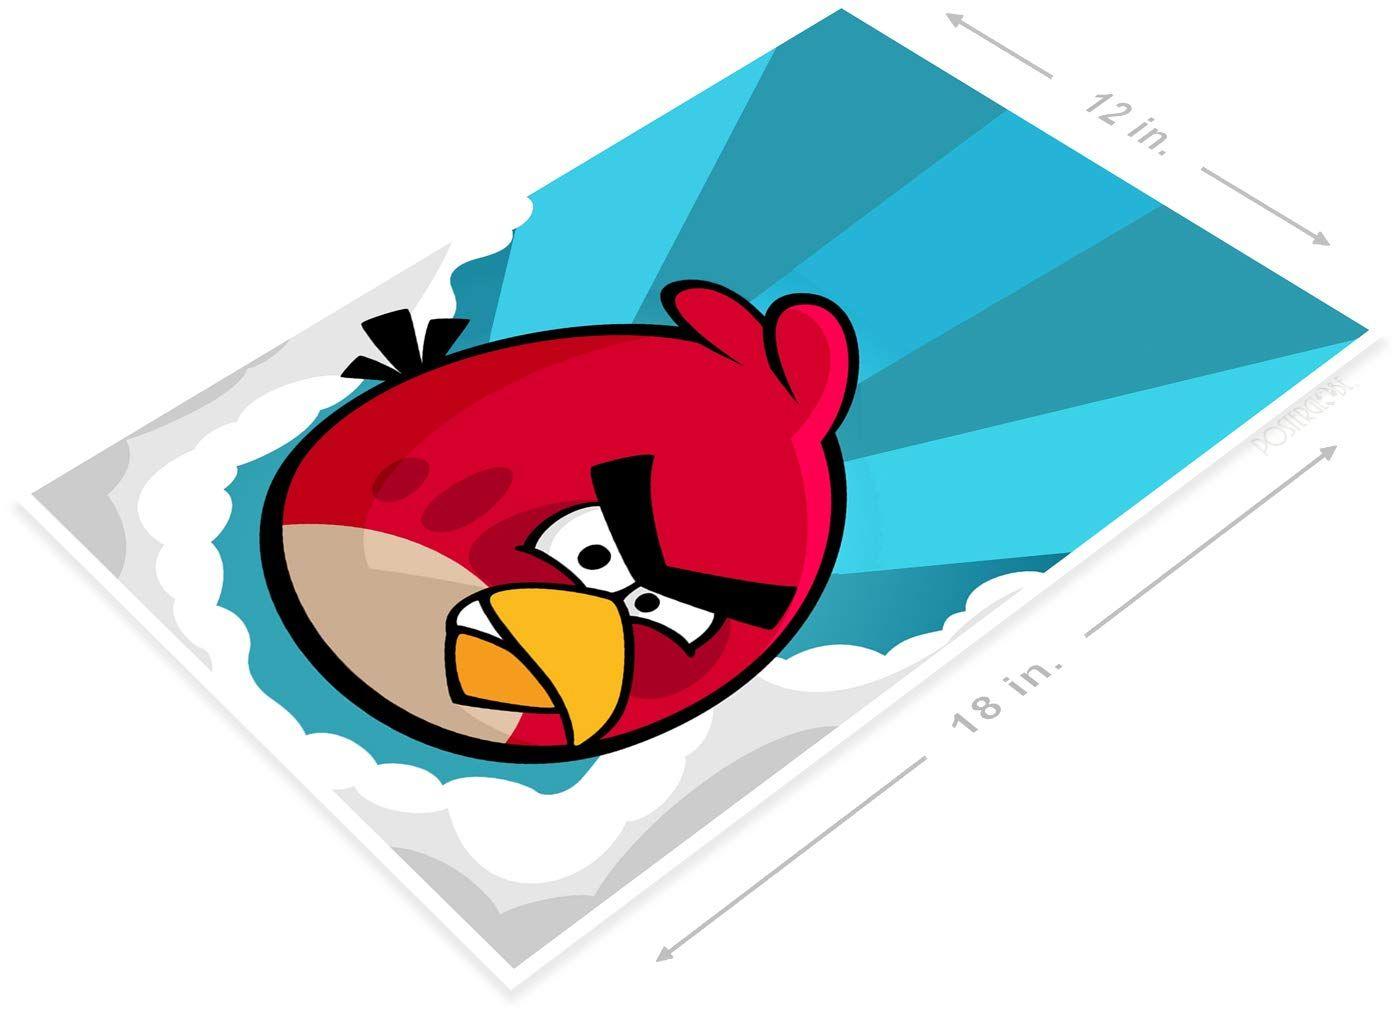 Angry Birds App Logo - Amazon.com: PosterGlobe Poster B105 Angry Birds Smart Phone App Game ...